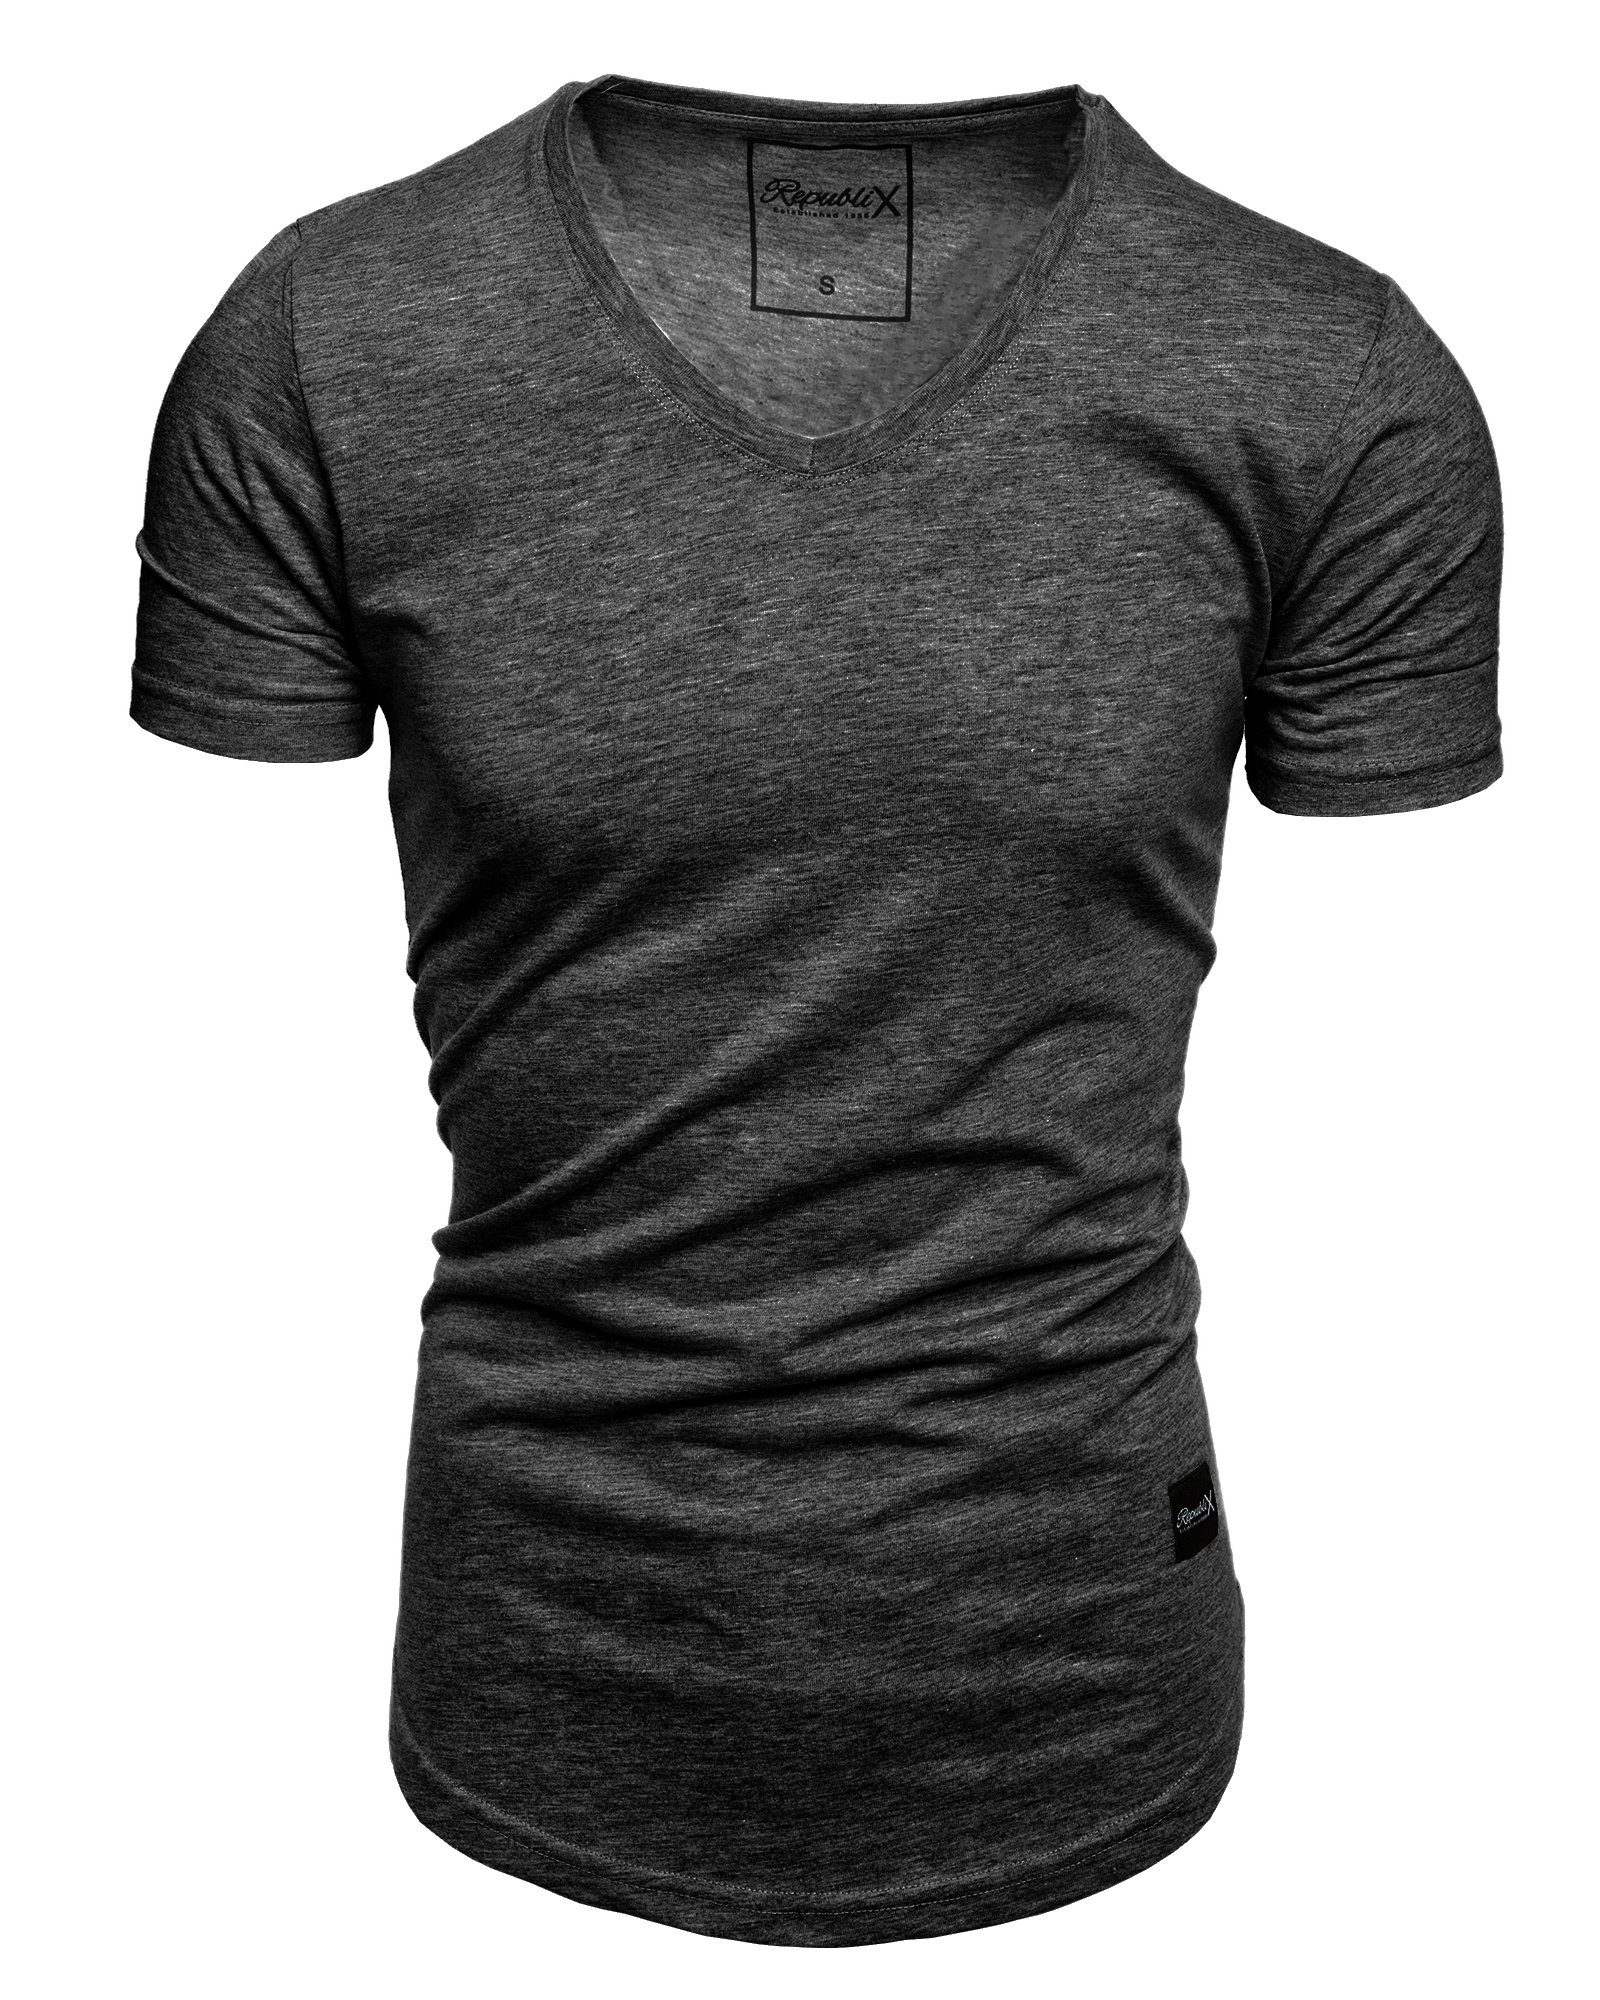 REPUBLIX T-Shirt BRANDON Herren Oversize Basic Shirt mit V-Ausschnitt Anthrazit Melange